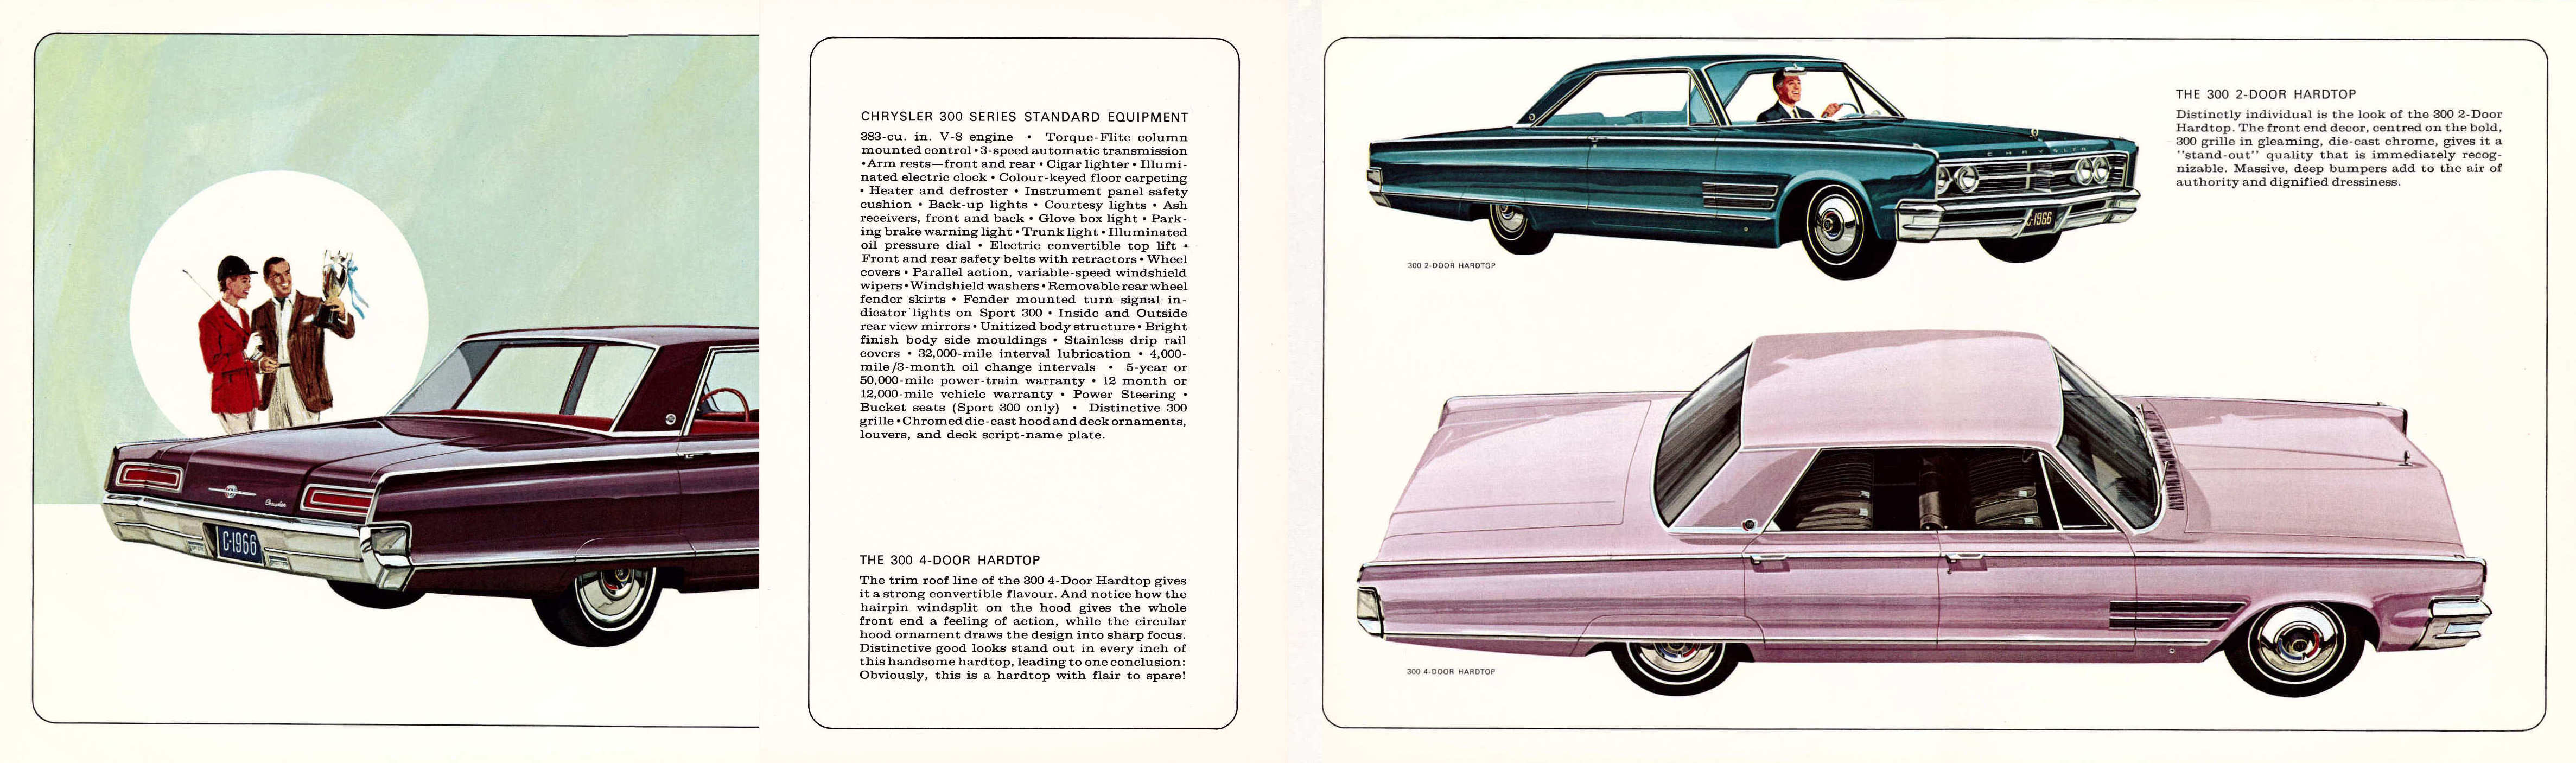 1966_Chrysler_Cdn-08-09c